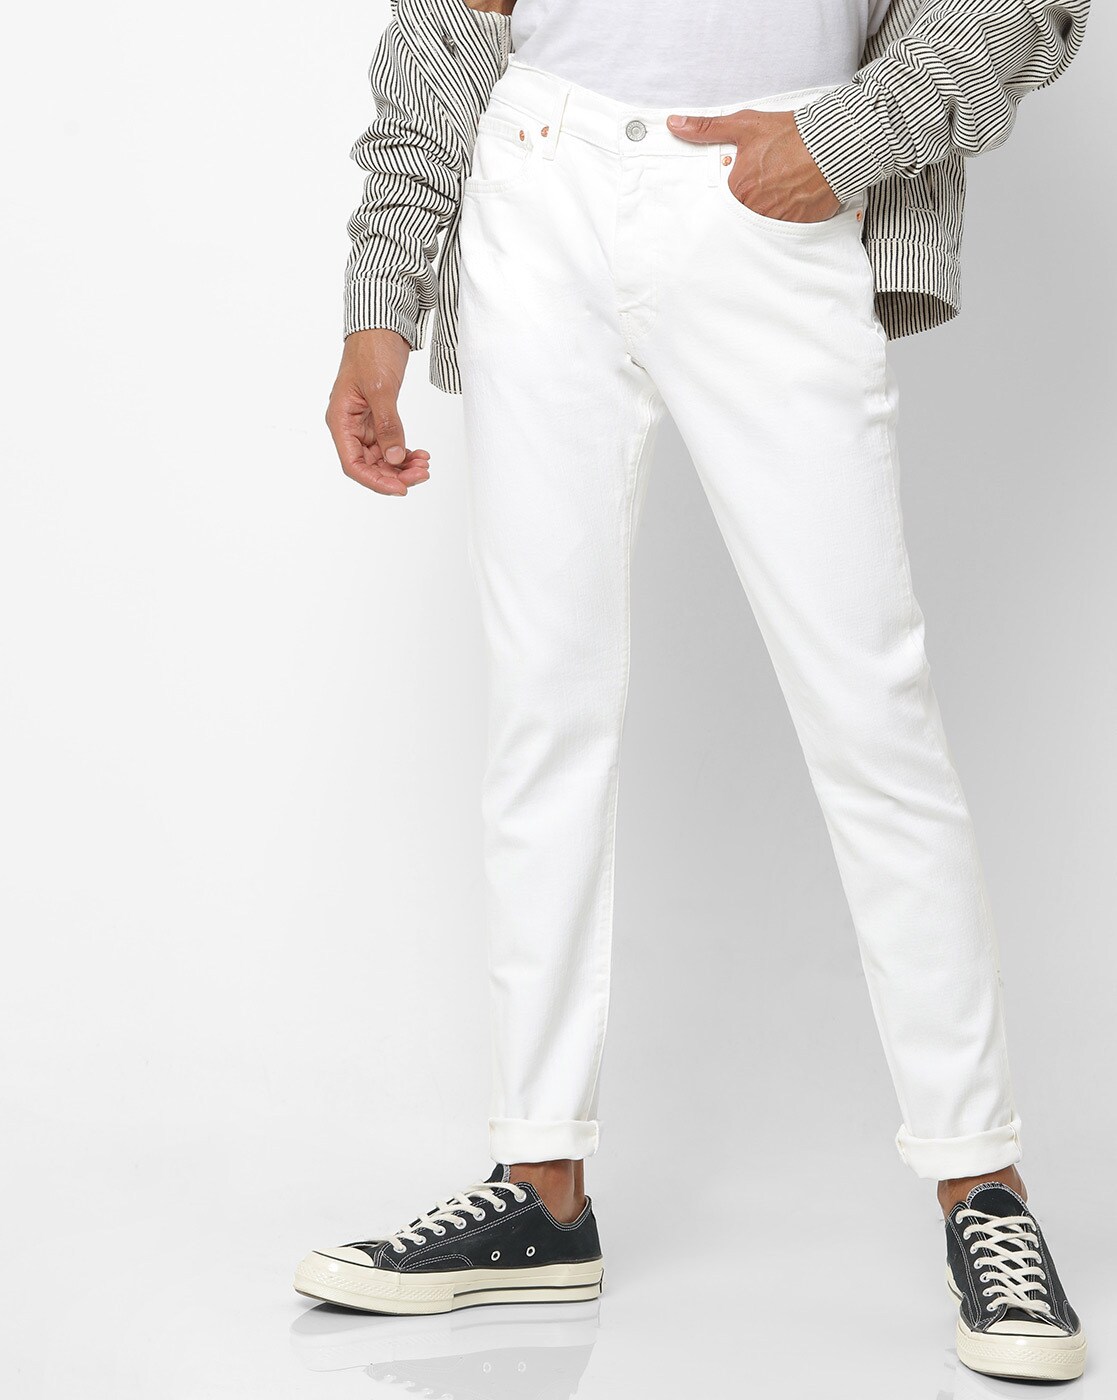 levi white jeans